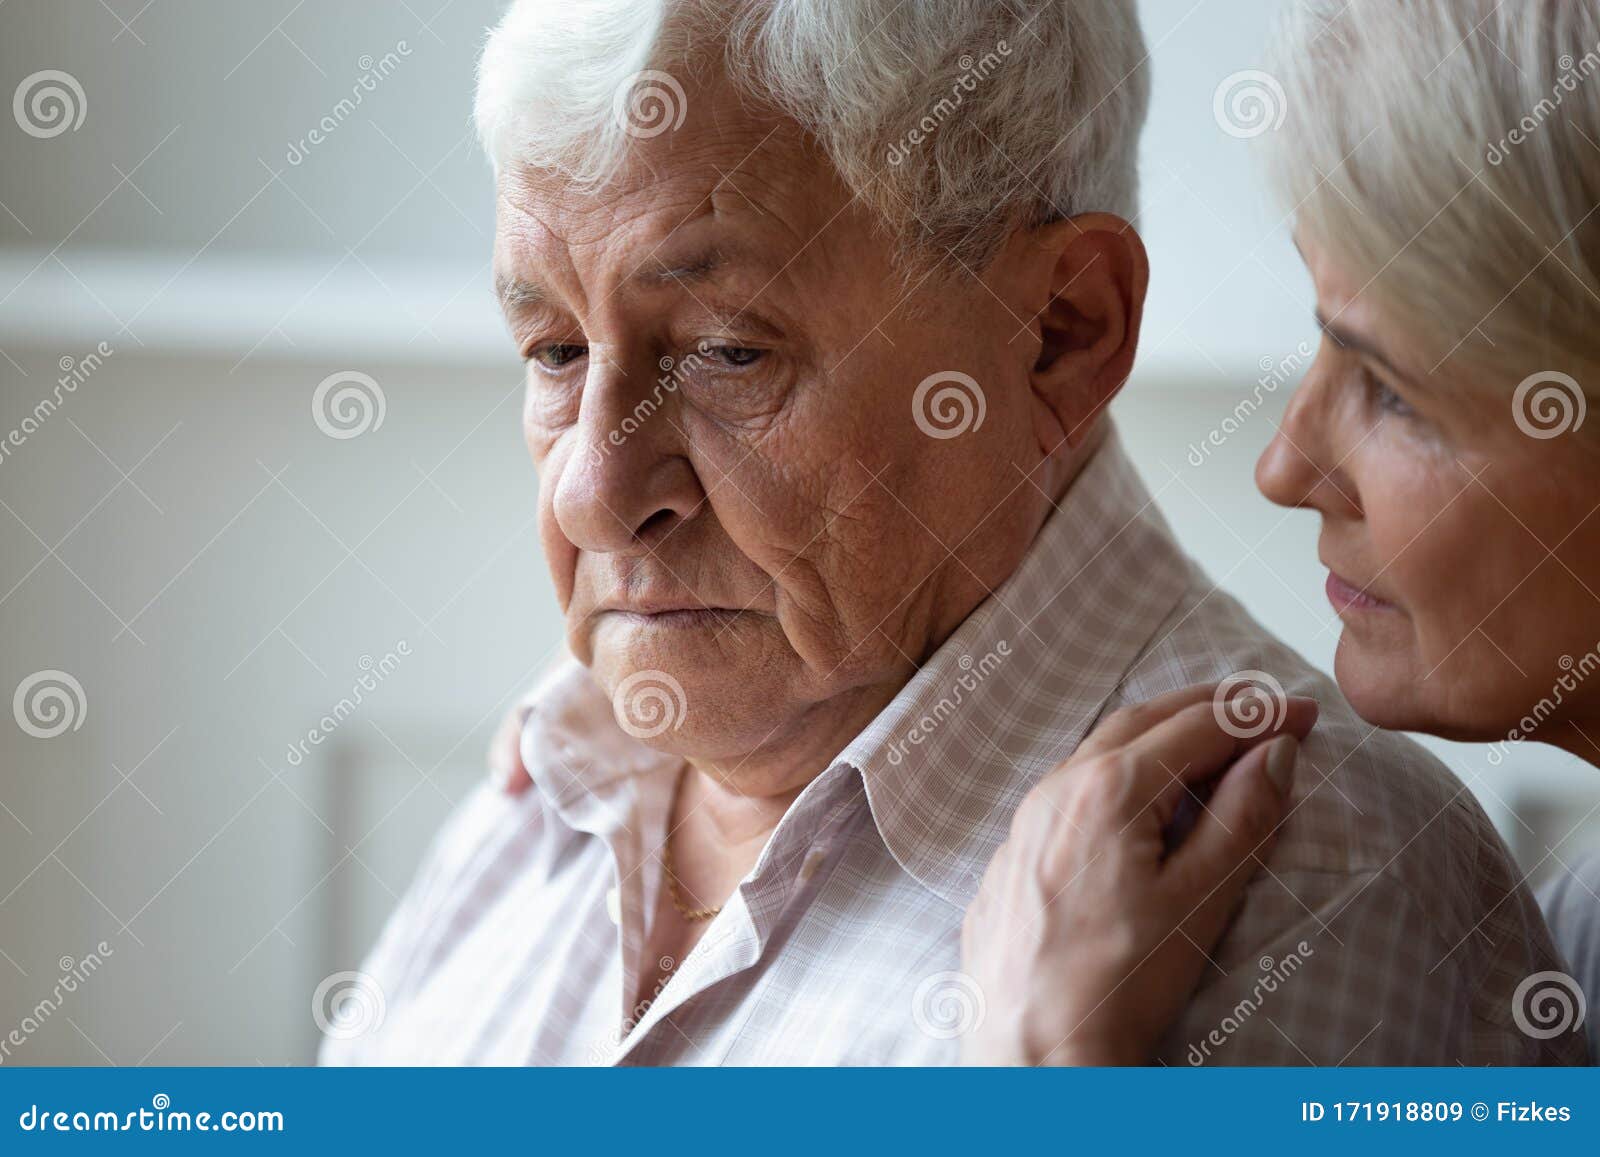 caring old wife support caress sad senior husband